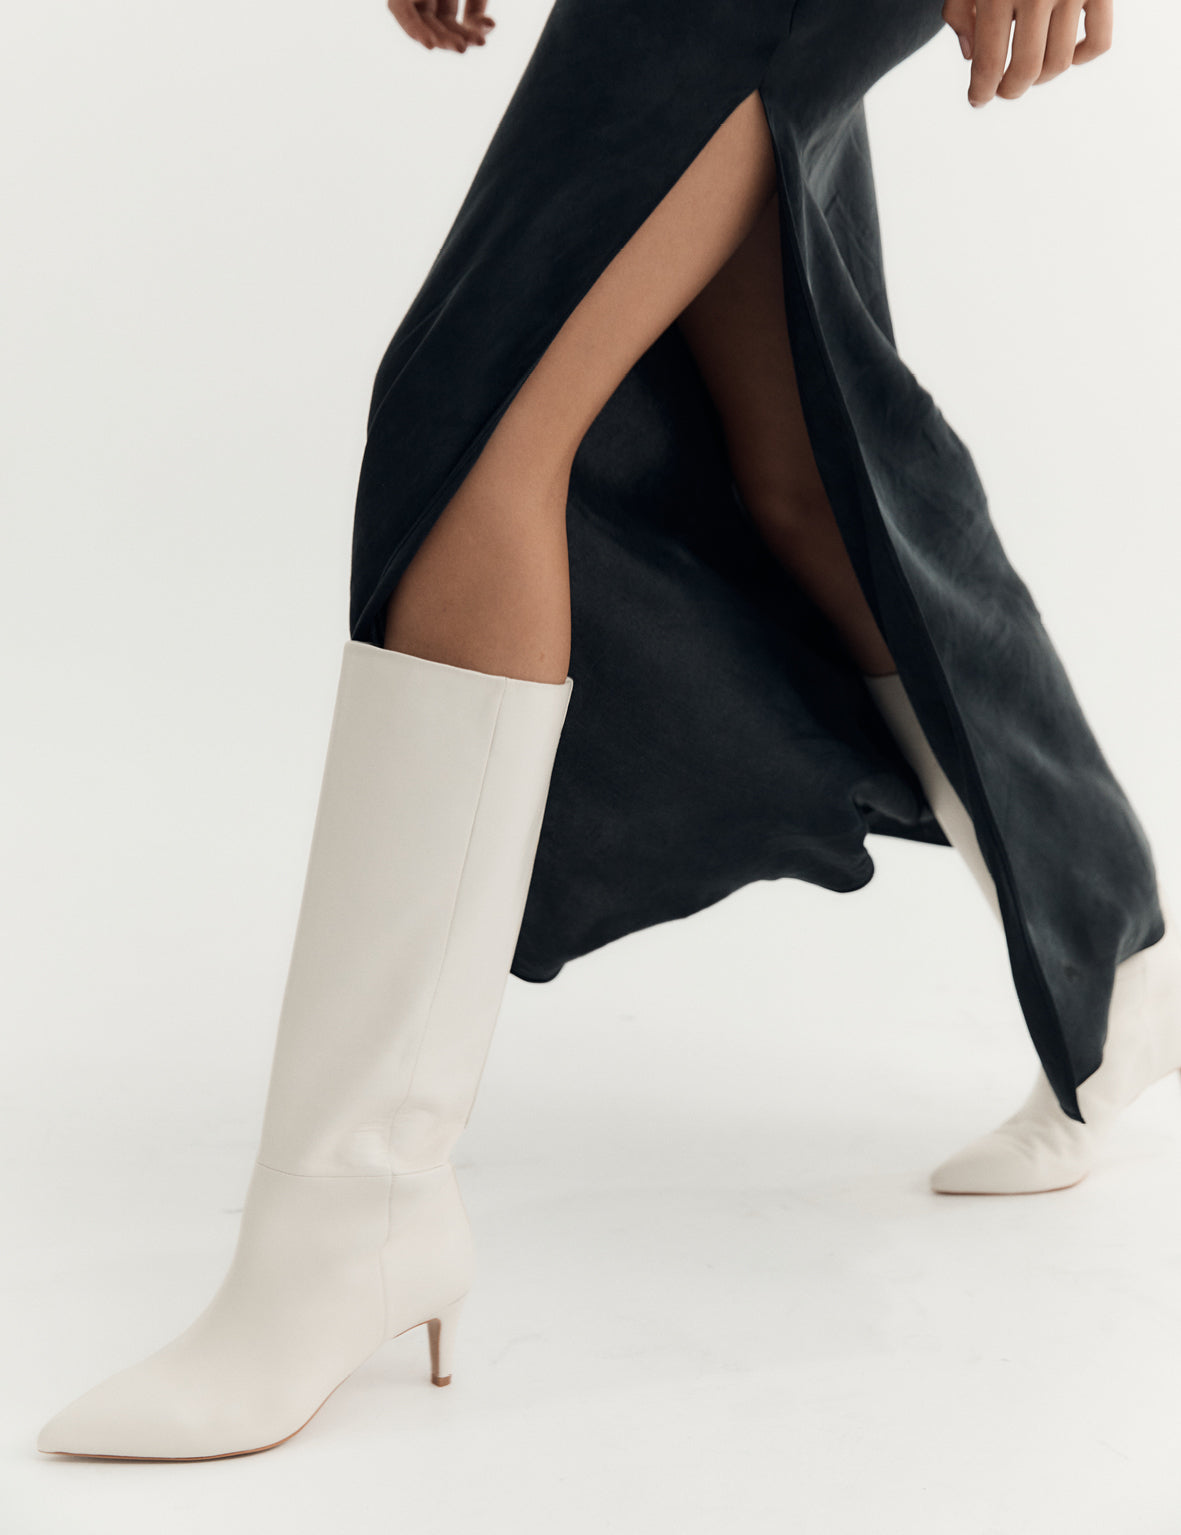 La Tribe | Sloane Knee High Boot - Tofu